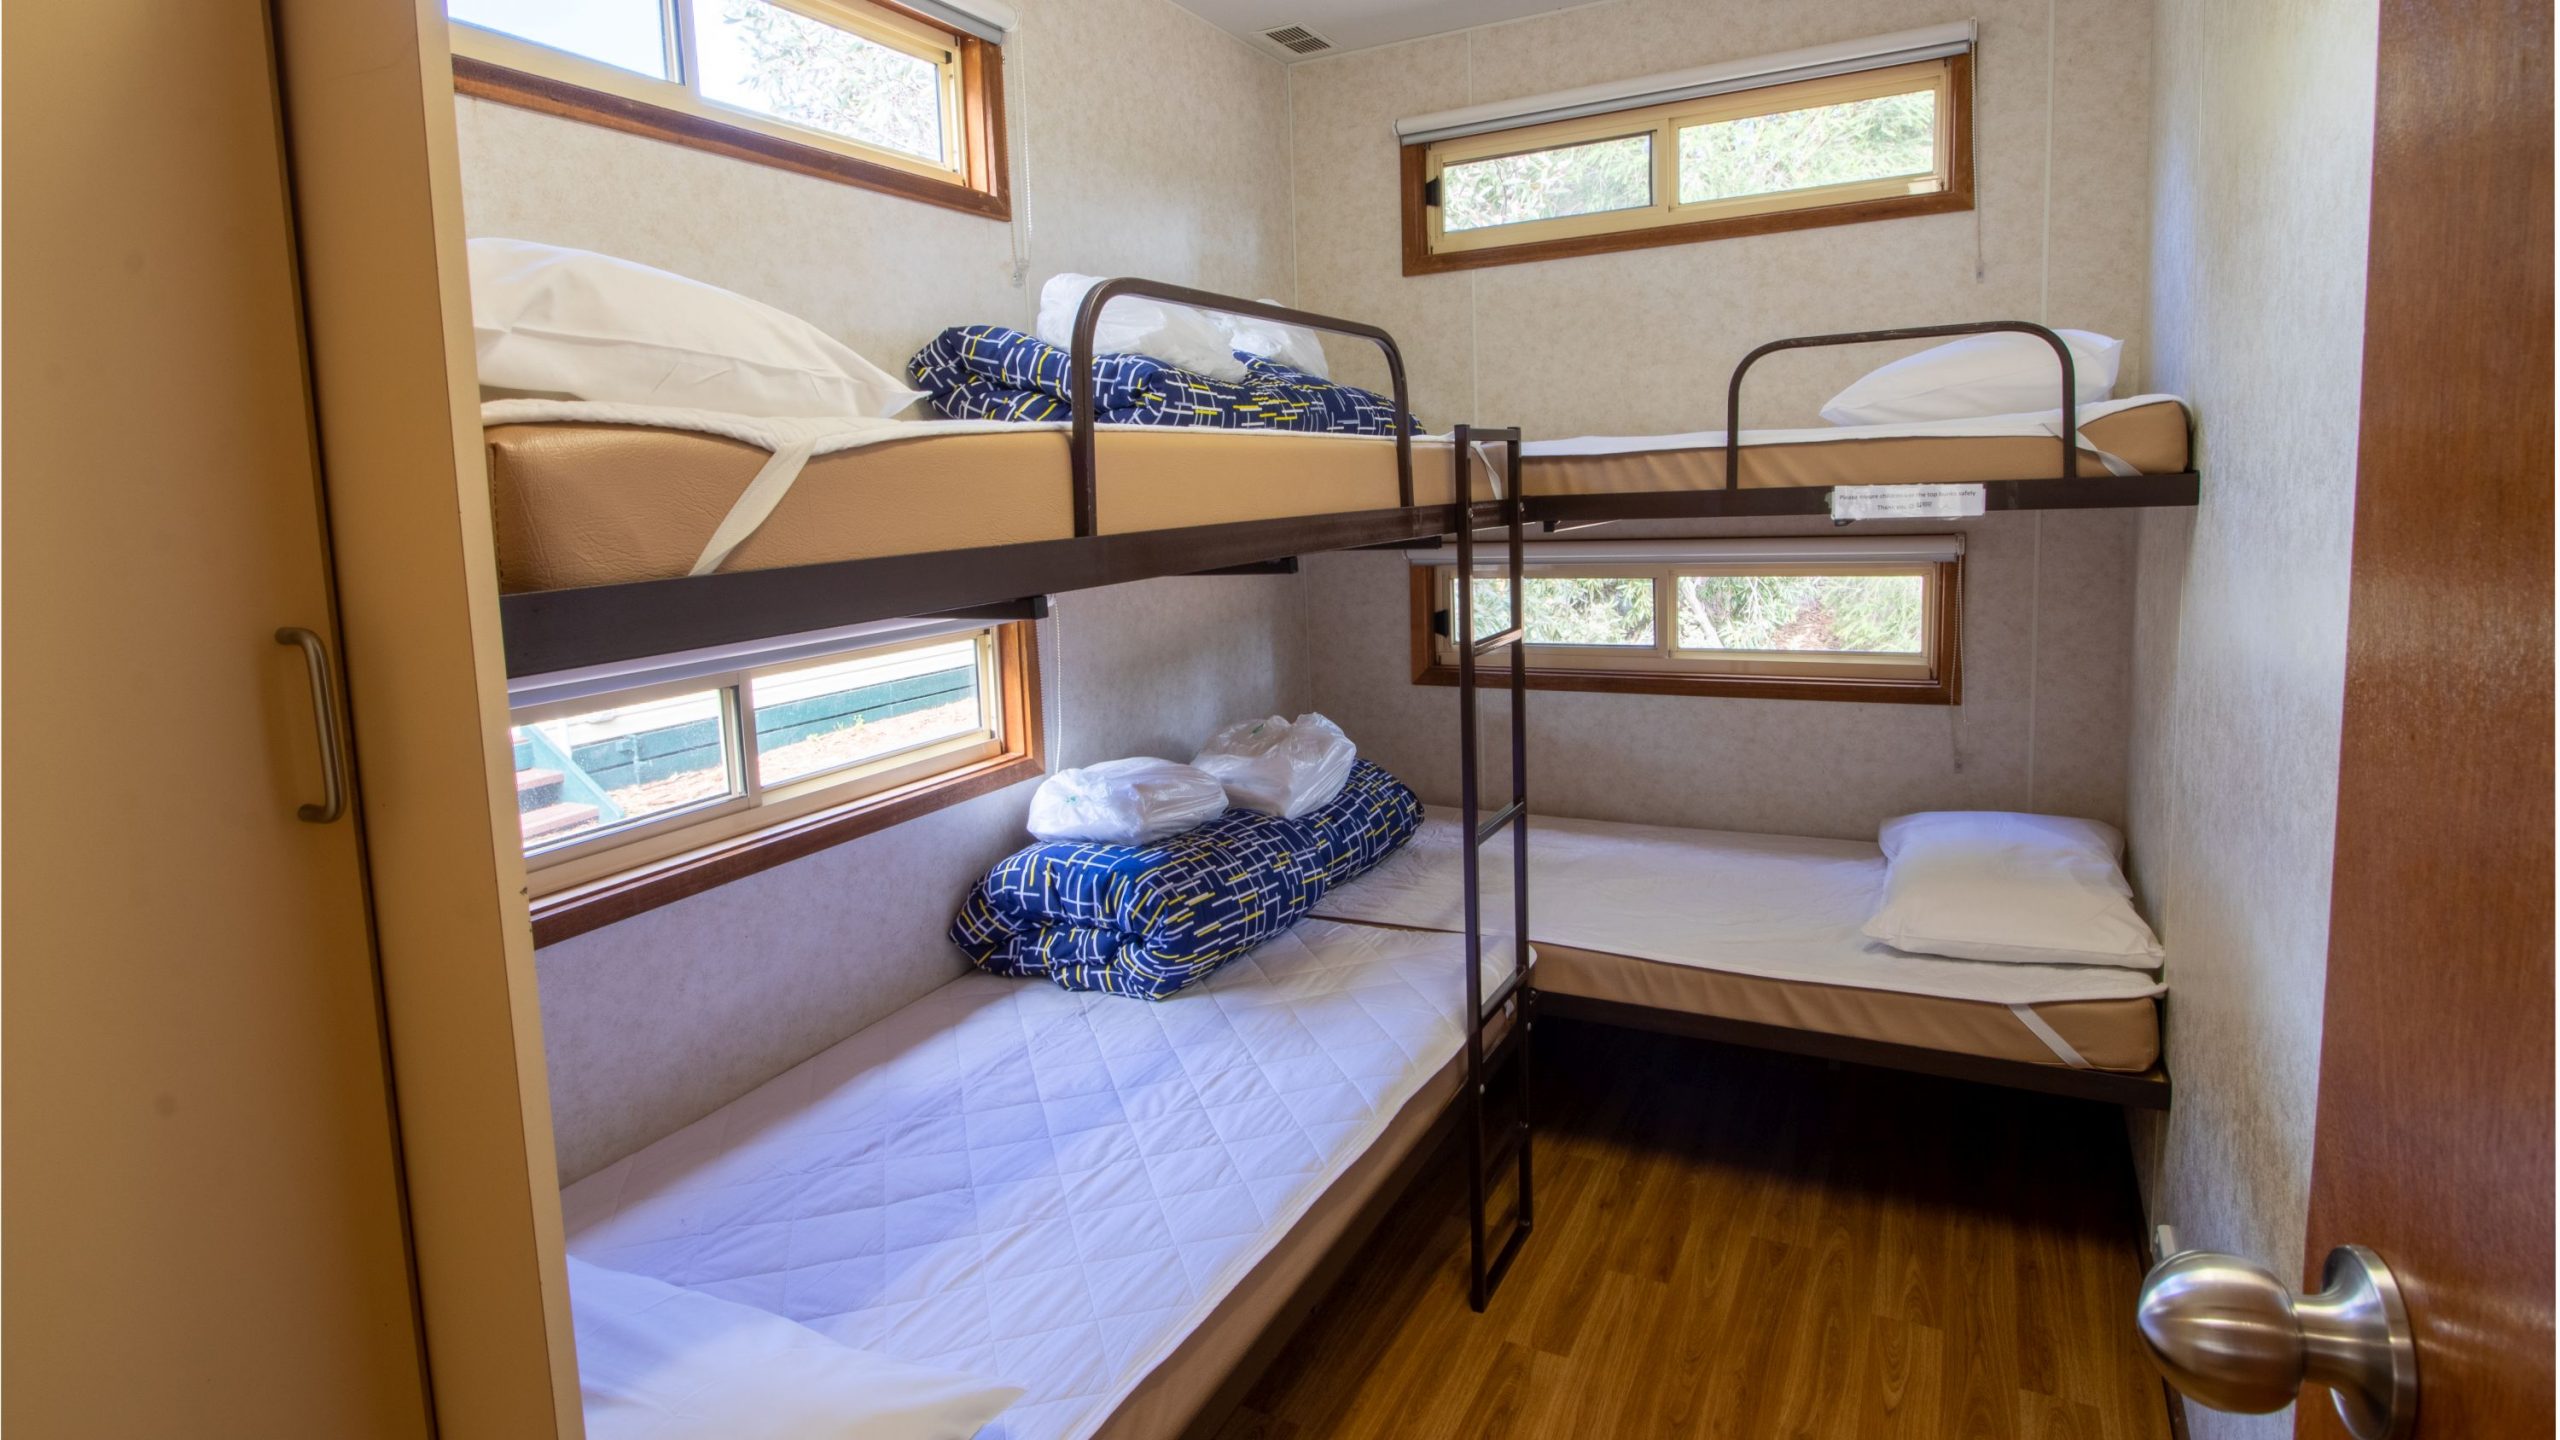 Park Cabin bunk bedroom